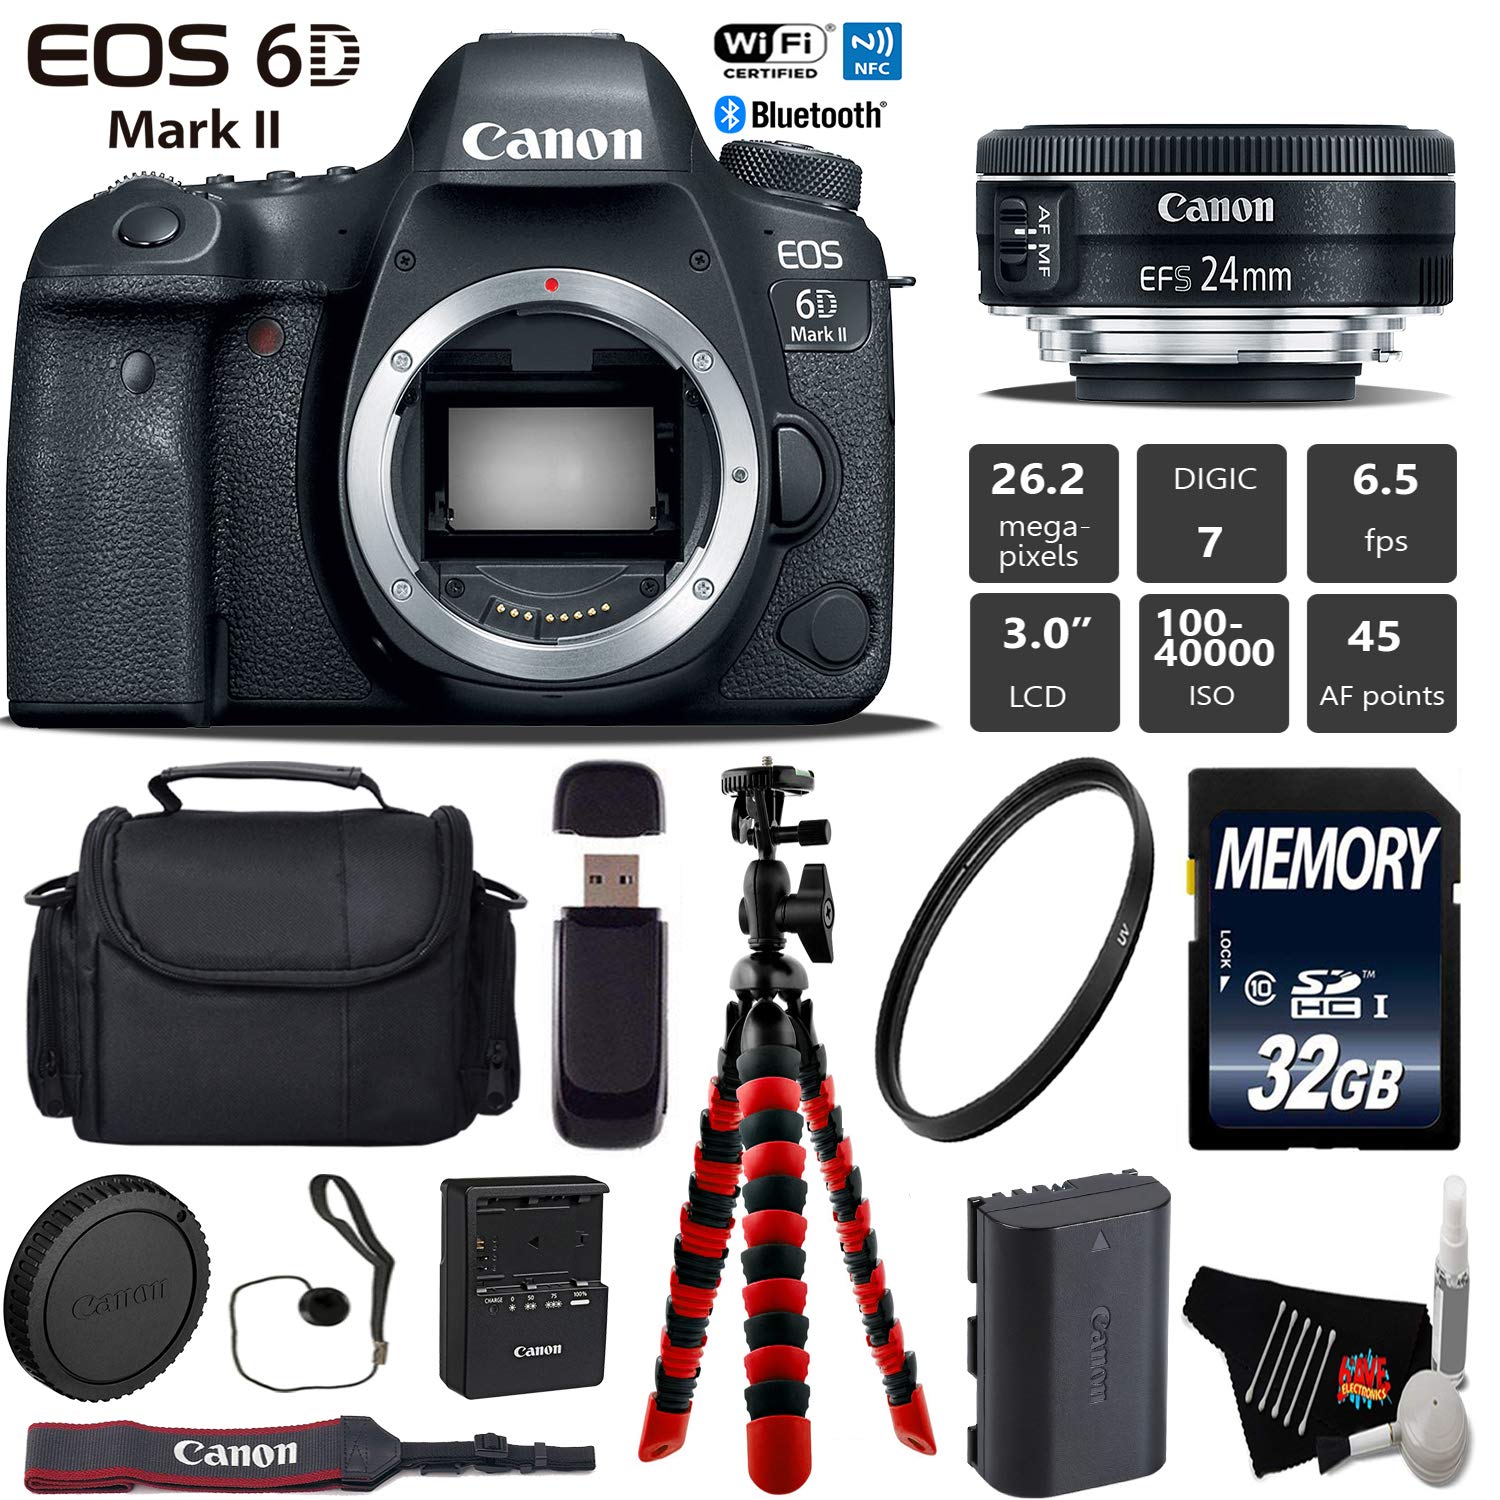 Canon EOS 6D Mark II DSLR Camera with 24mm f/2.8 STM Lens + Wireless Remote + UV Protection Filter + Case + Wrist Strap Starter Bundle